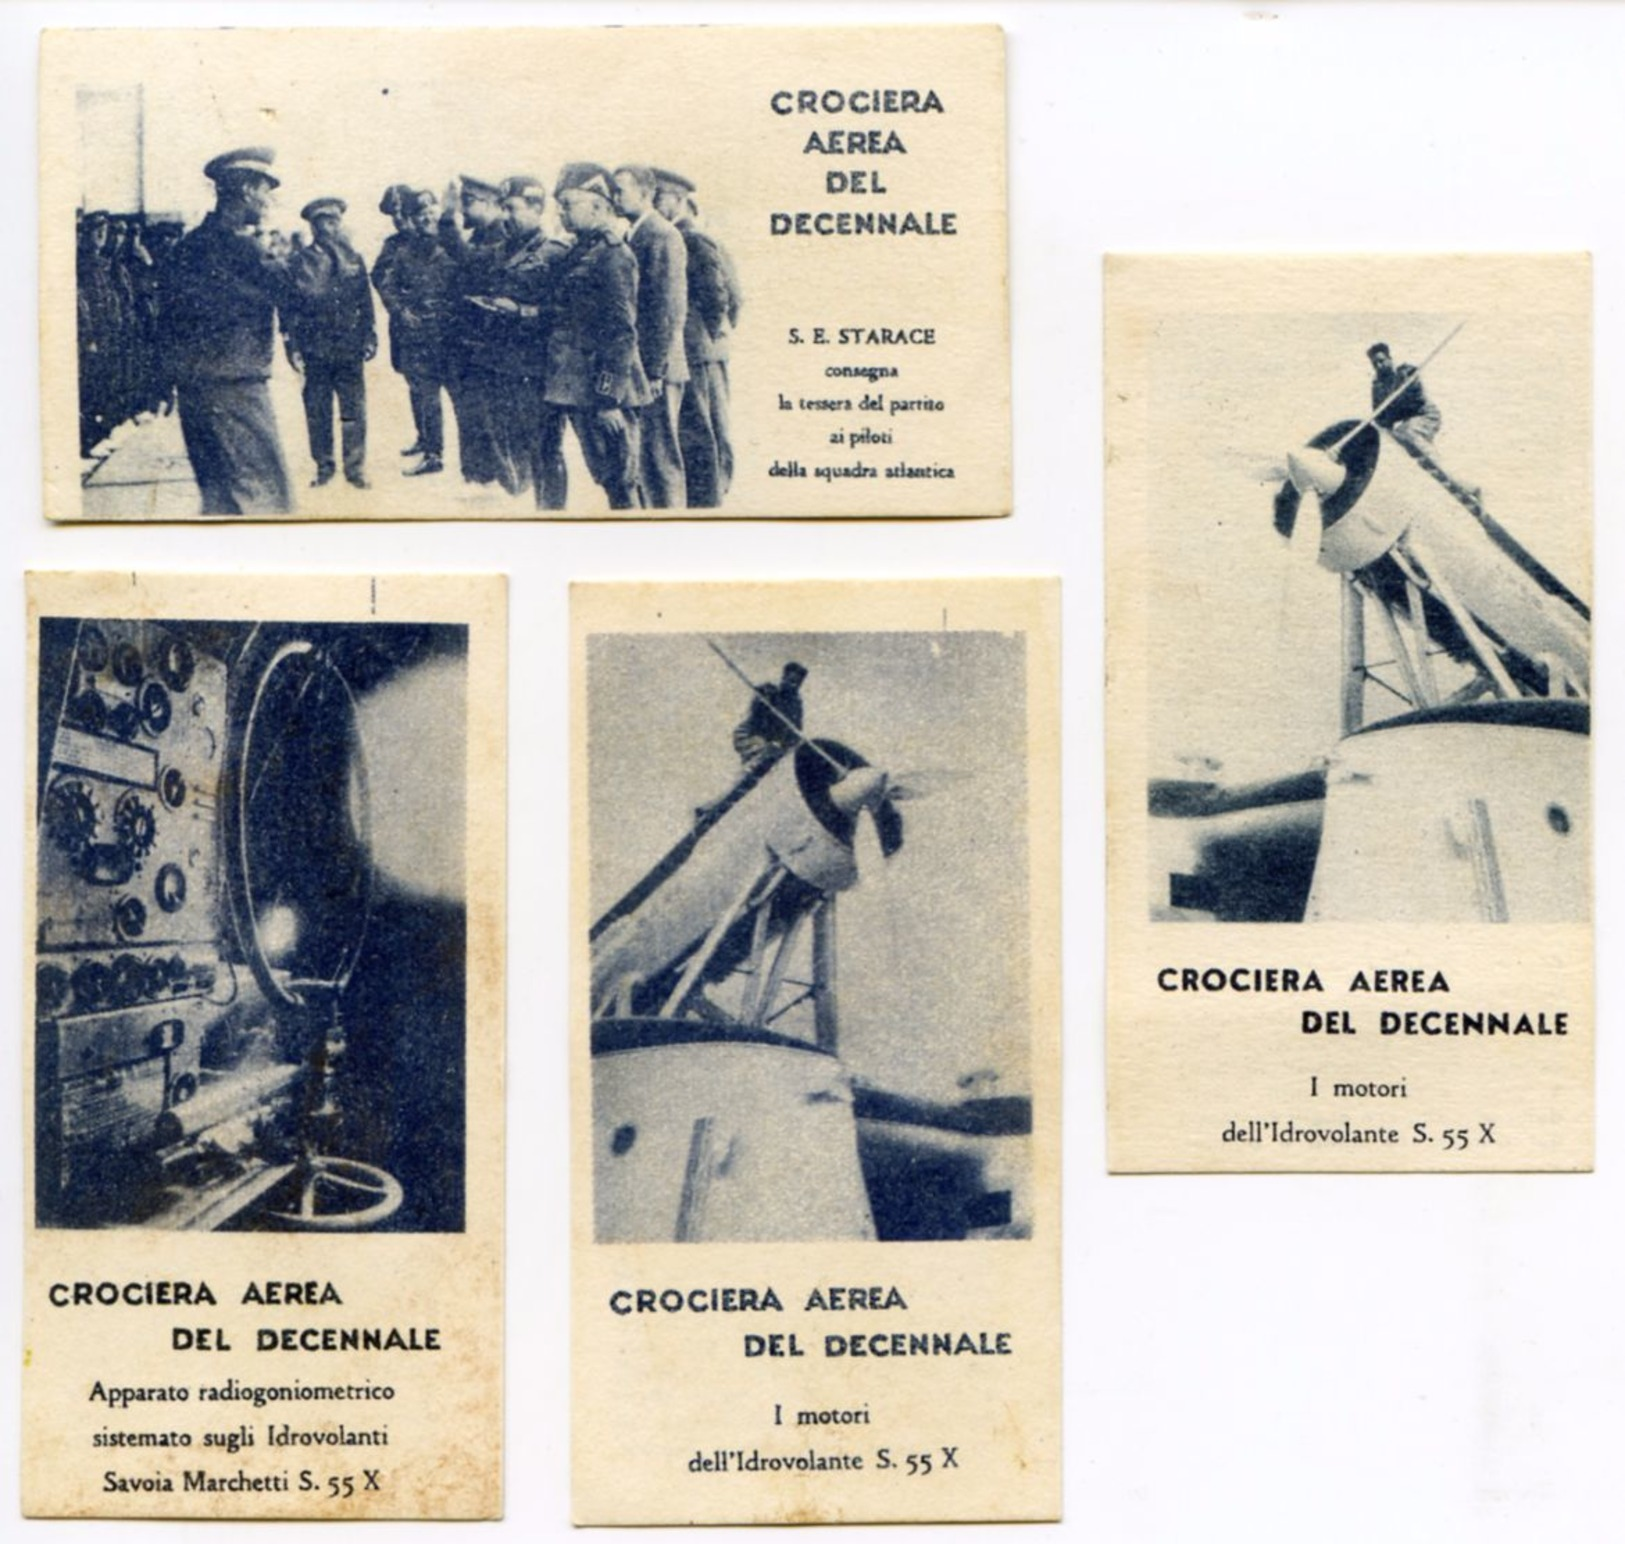 210> CROCIERA AEREA DEL DECENNALE Rarissime Figurine Perugina - Fascio Fascismo Duce - 1934 - Documenti Storici